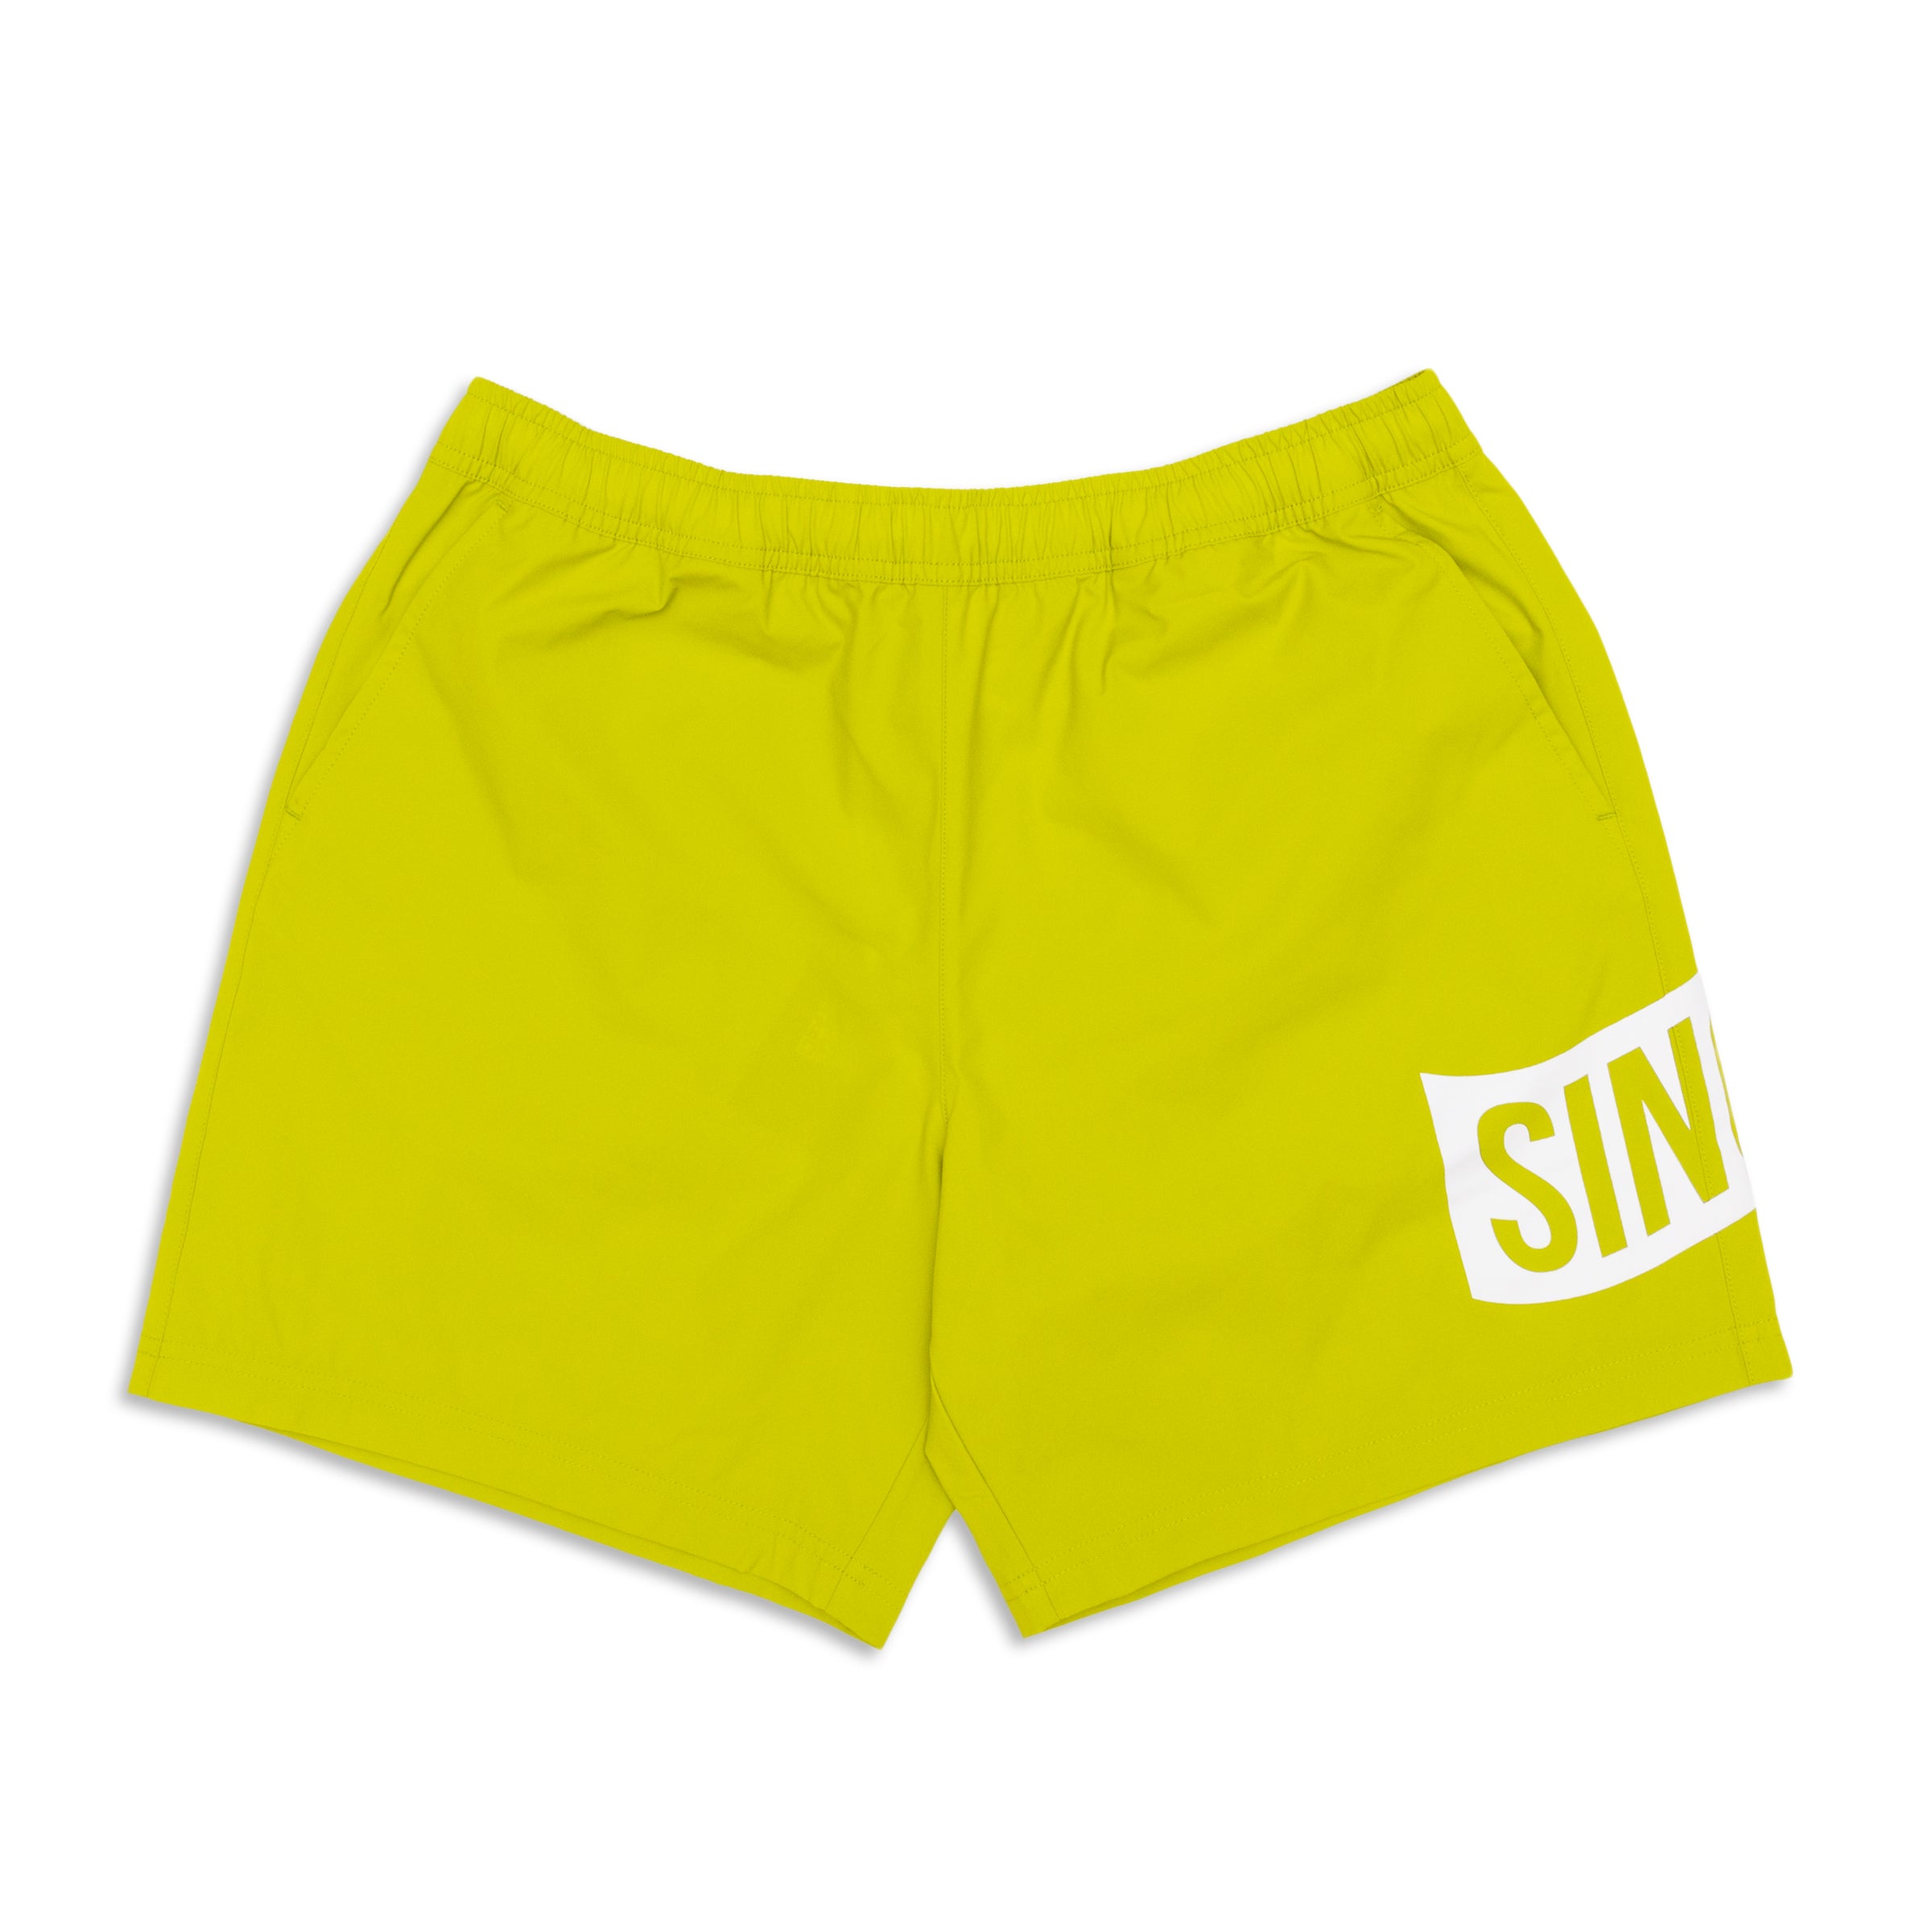 Shrek Since Flag Side Print Every Day Shorts